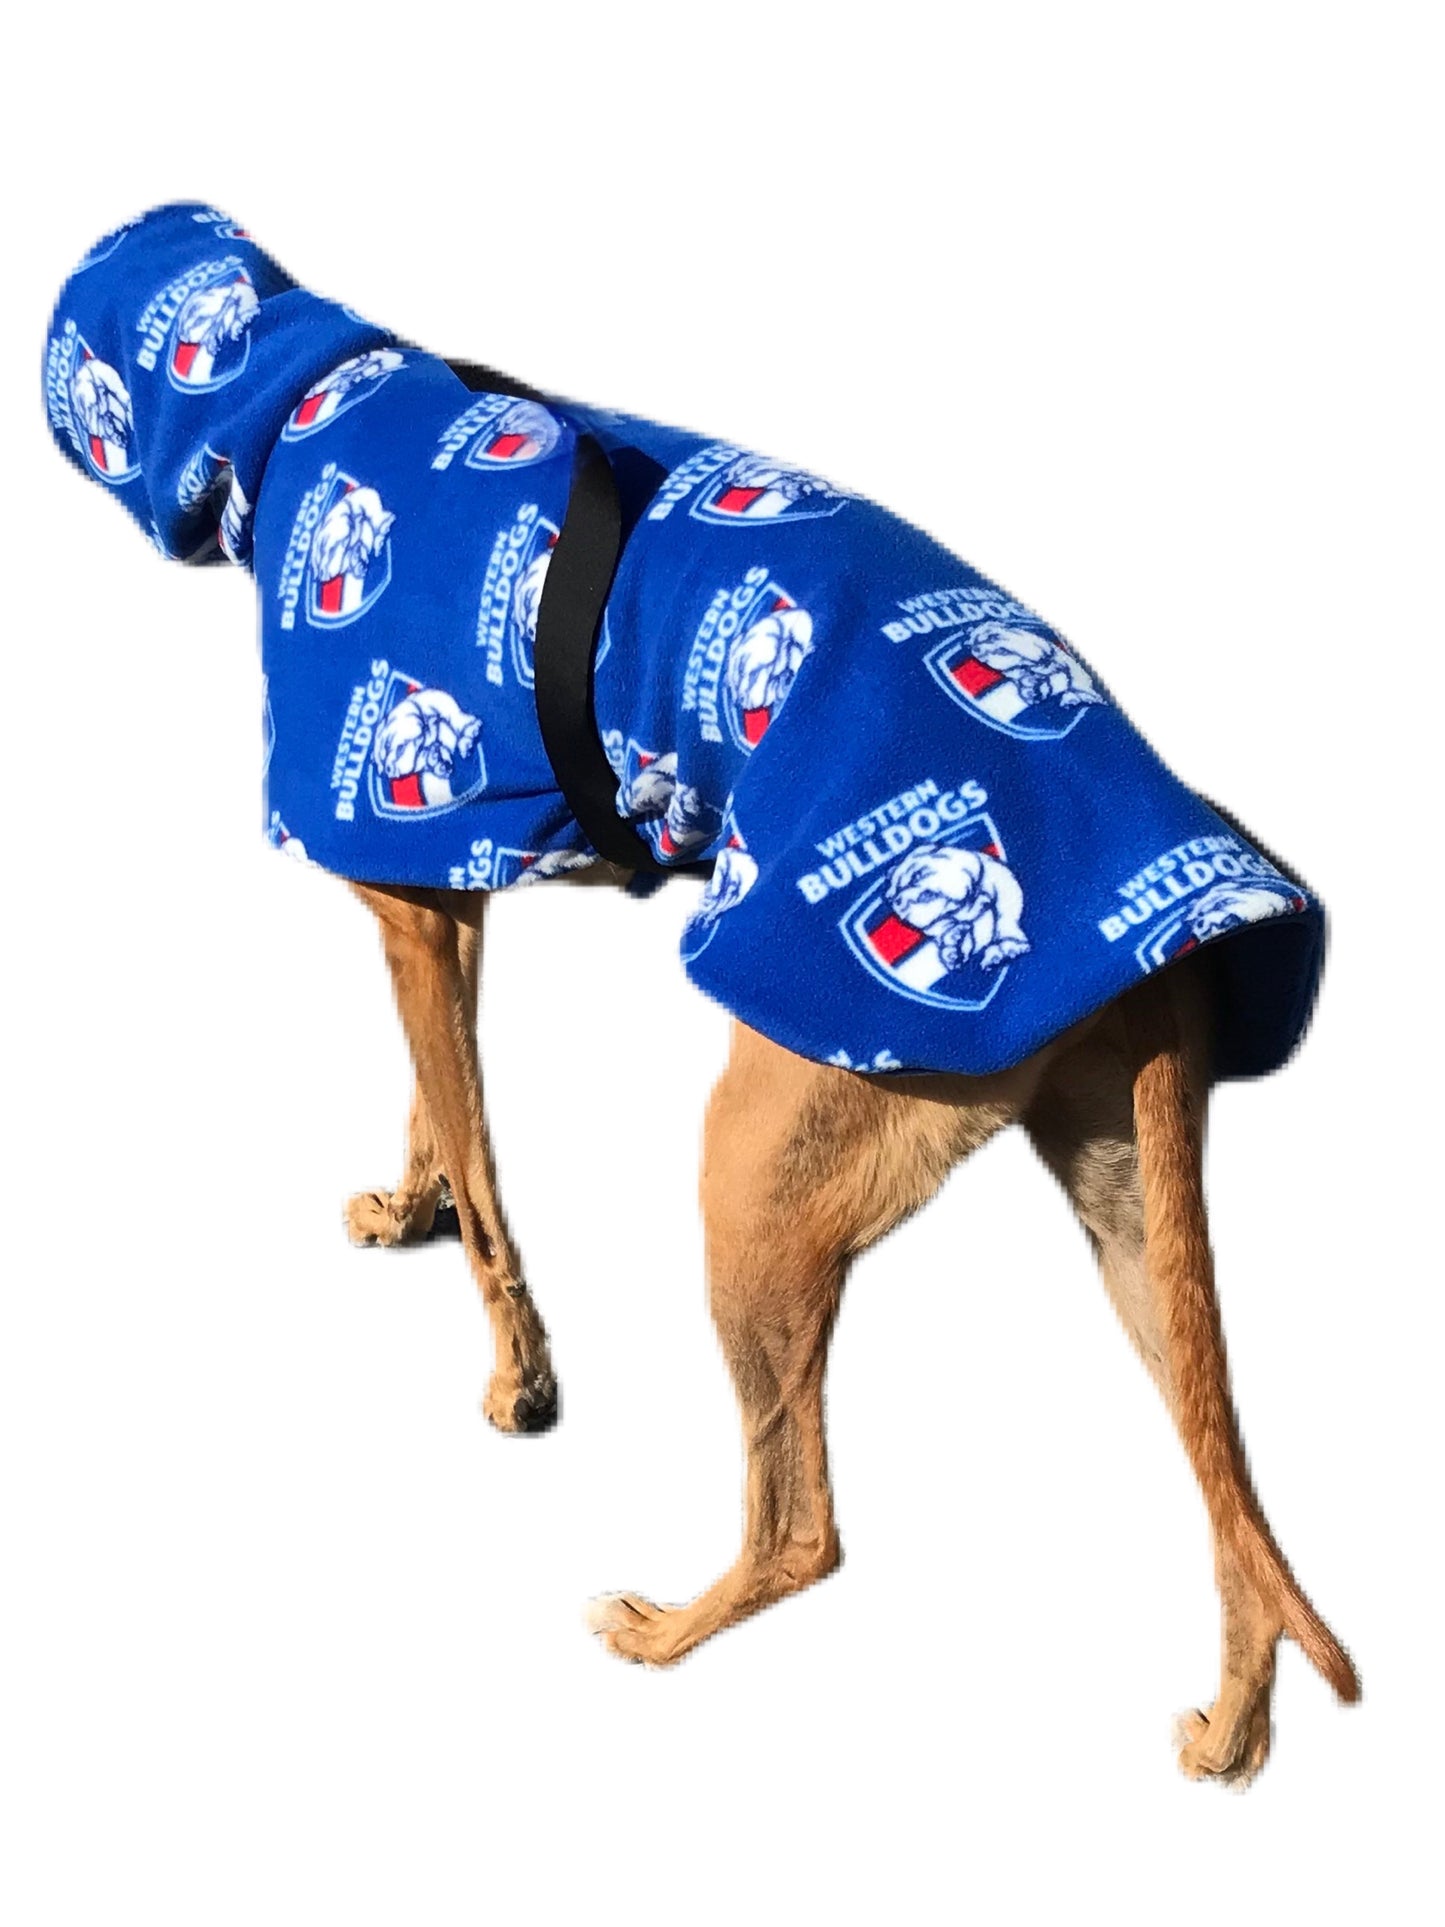 AFL Western Bulldogs inspired greyhound coat deluxe style double polar fleece washable